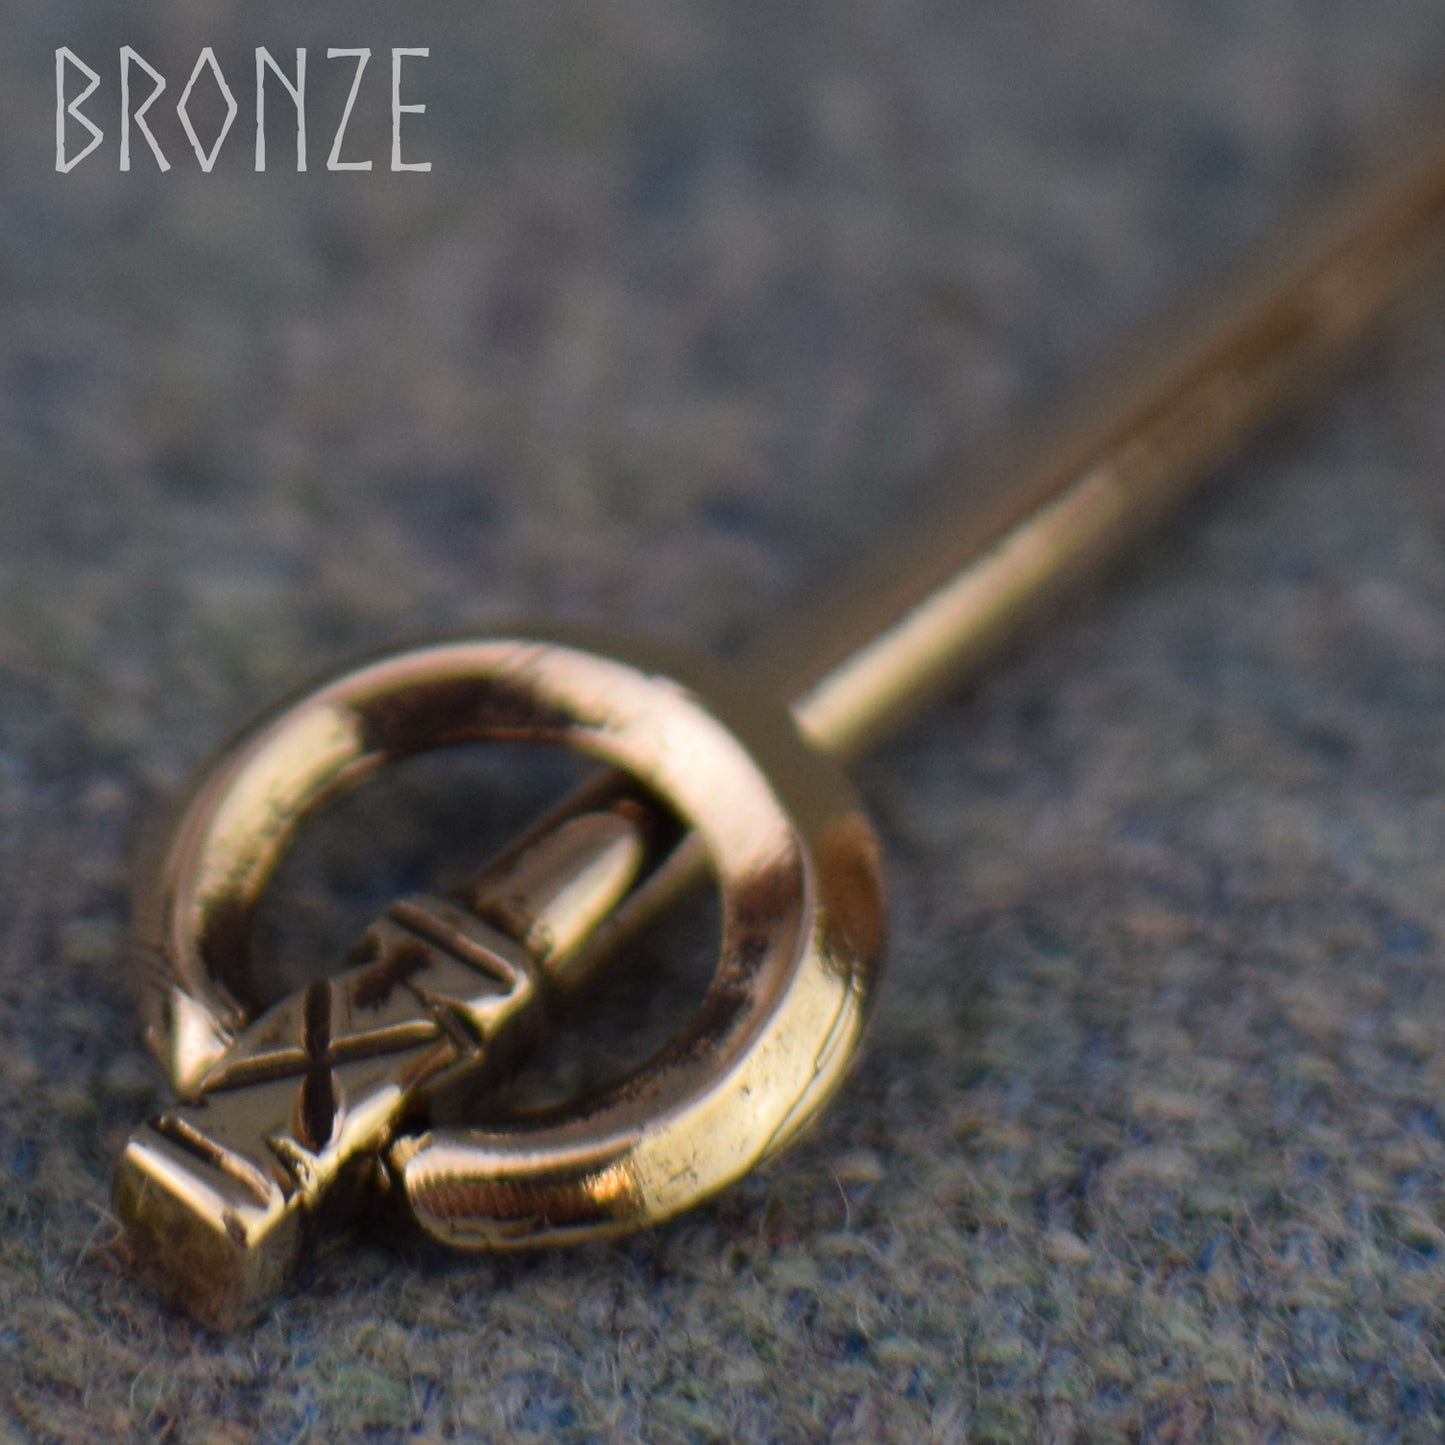 Bronze Baluster Ring Pin - Cross Design